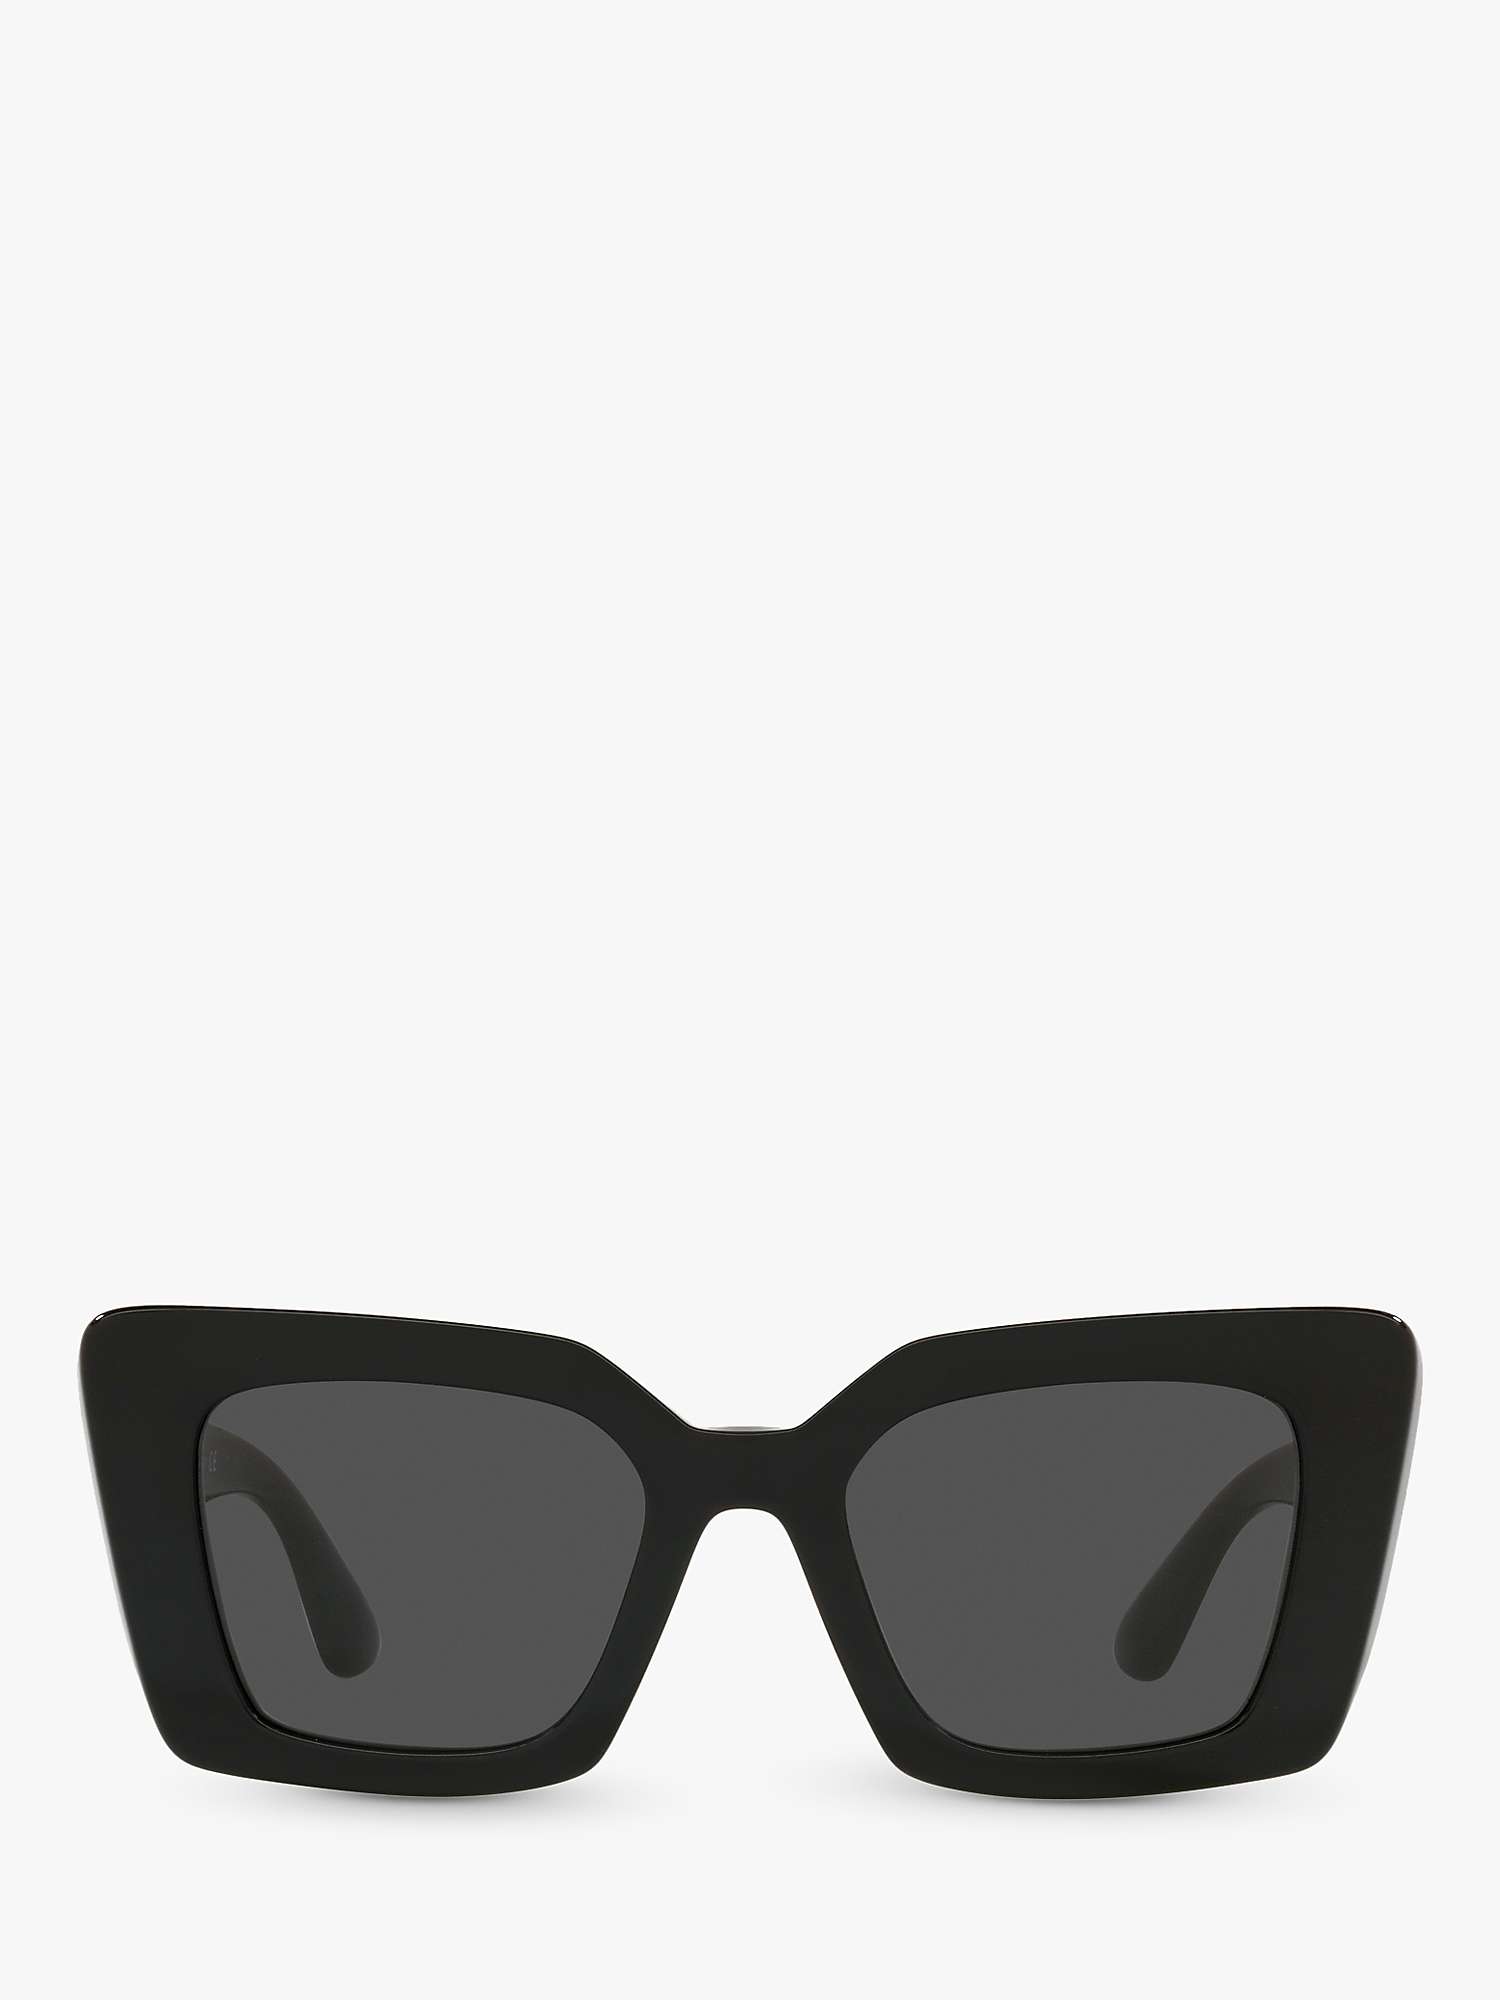 Buy Burberry BE4344 Women's Square Sunglasses, Black Shine/Grey Online at johnlewis.com